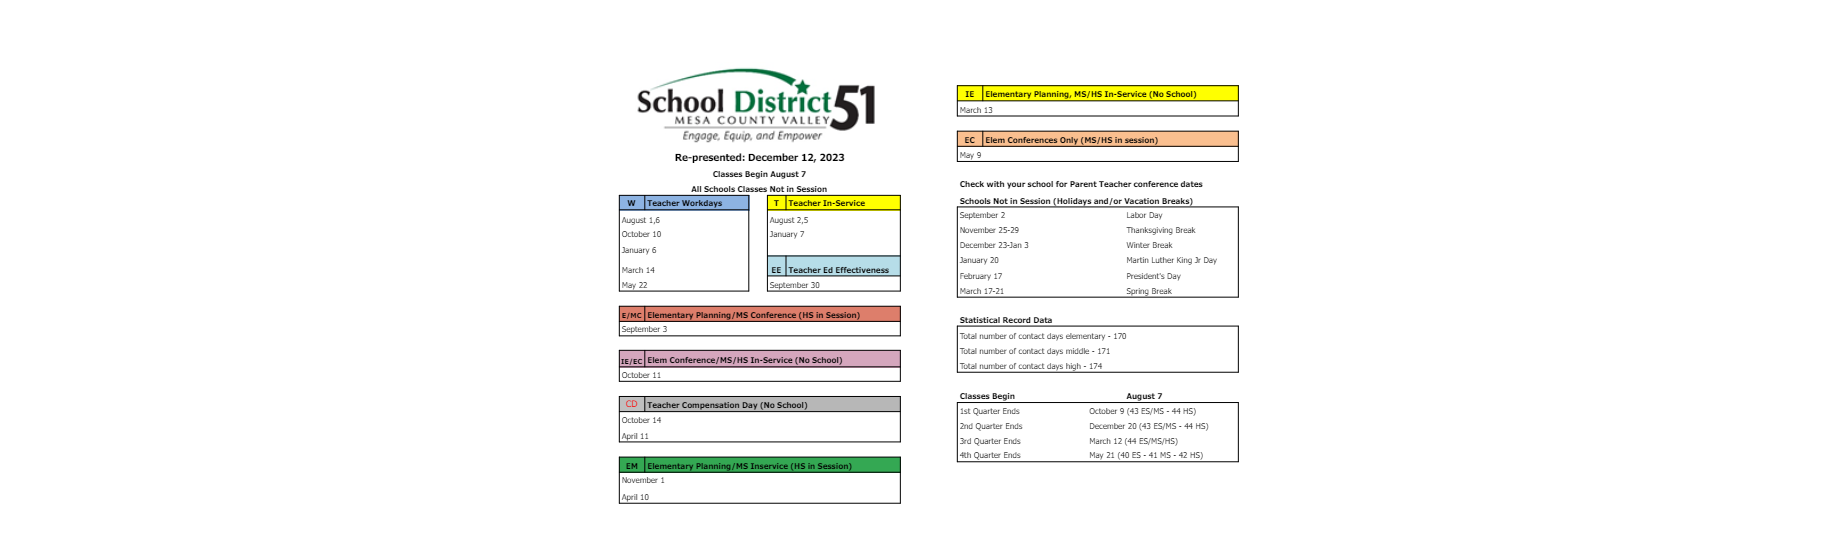 District School Academic Calendar Key for Lincoln Orchard Mesa Elementary School